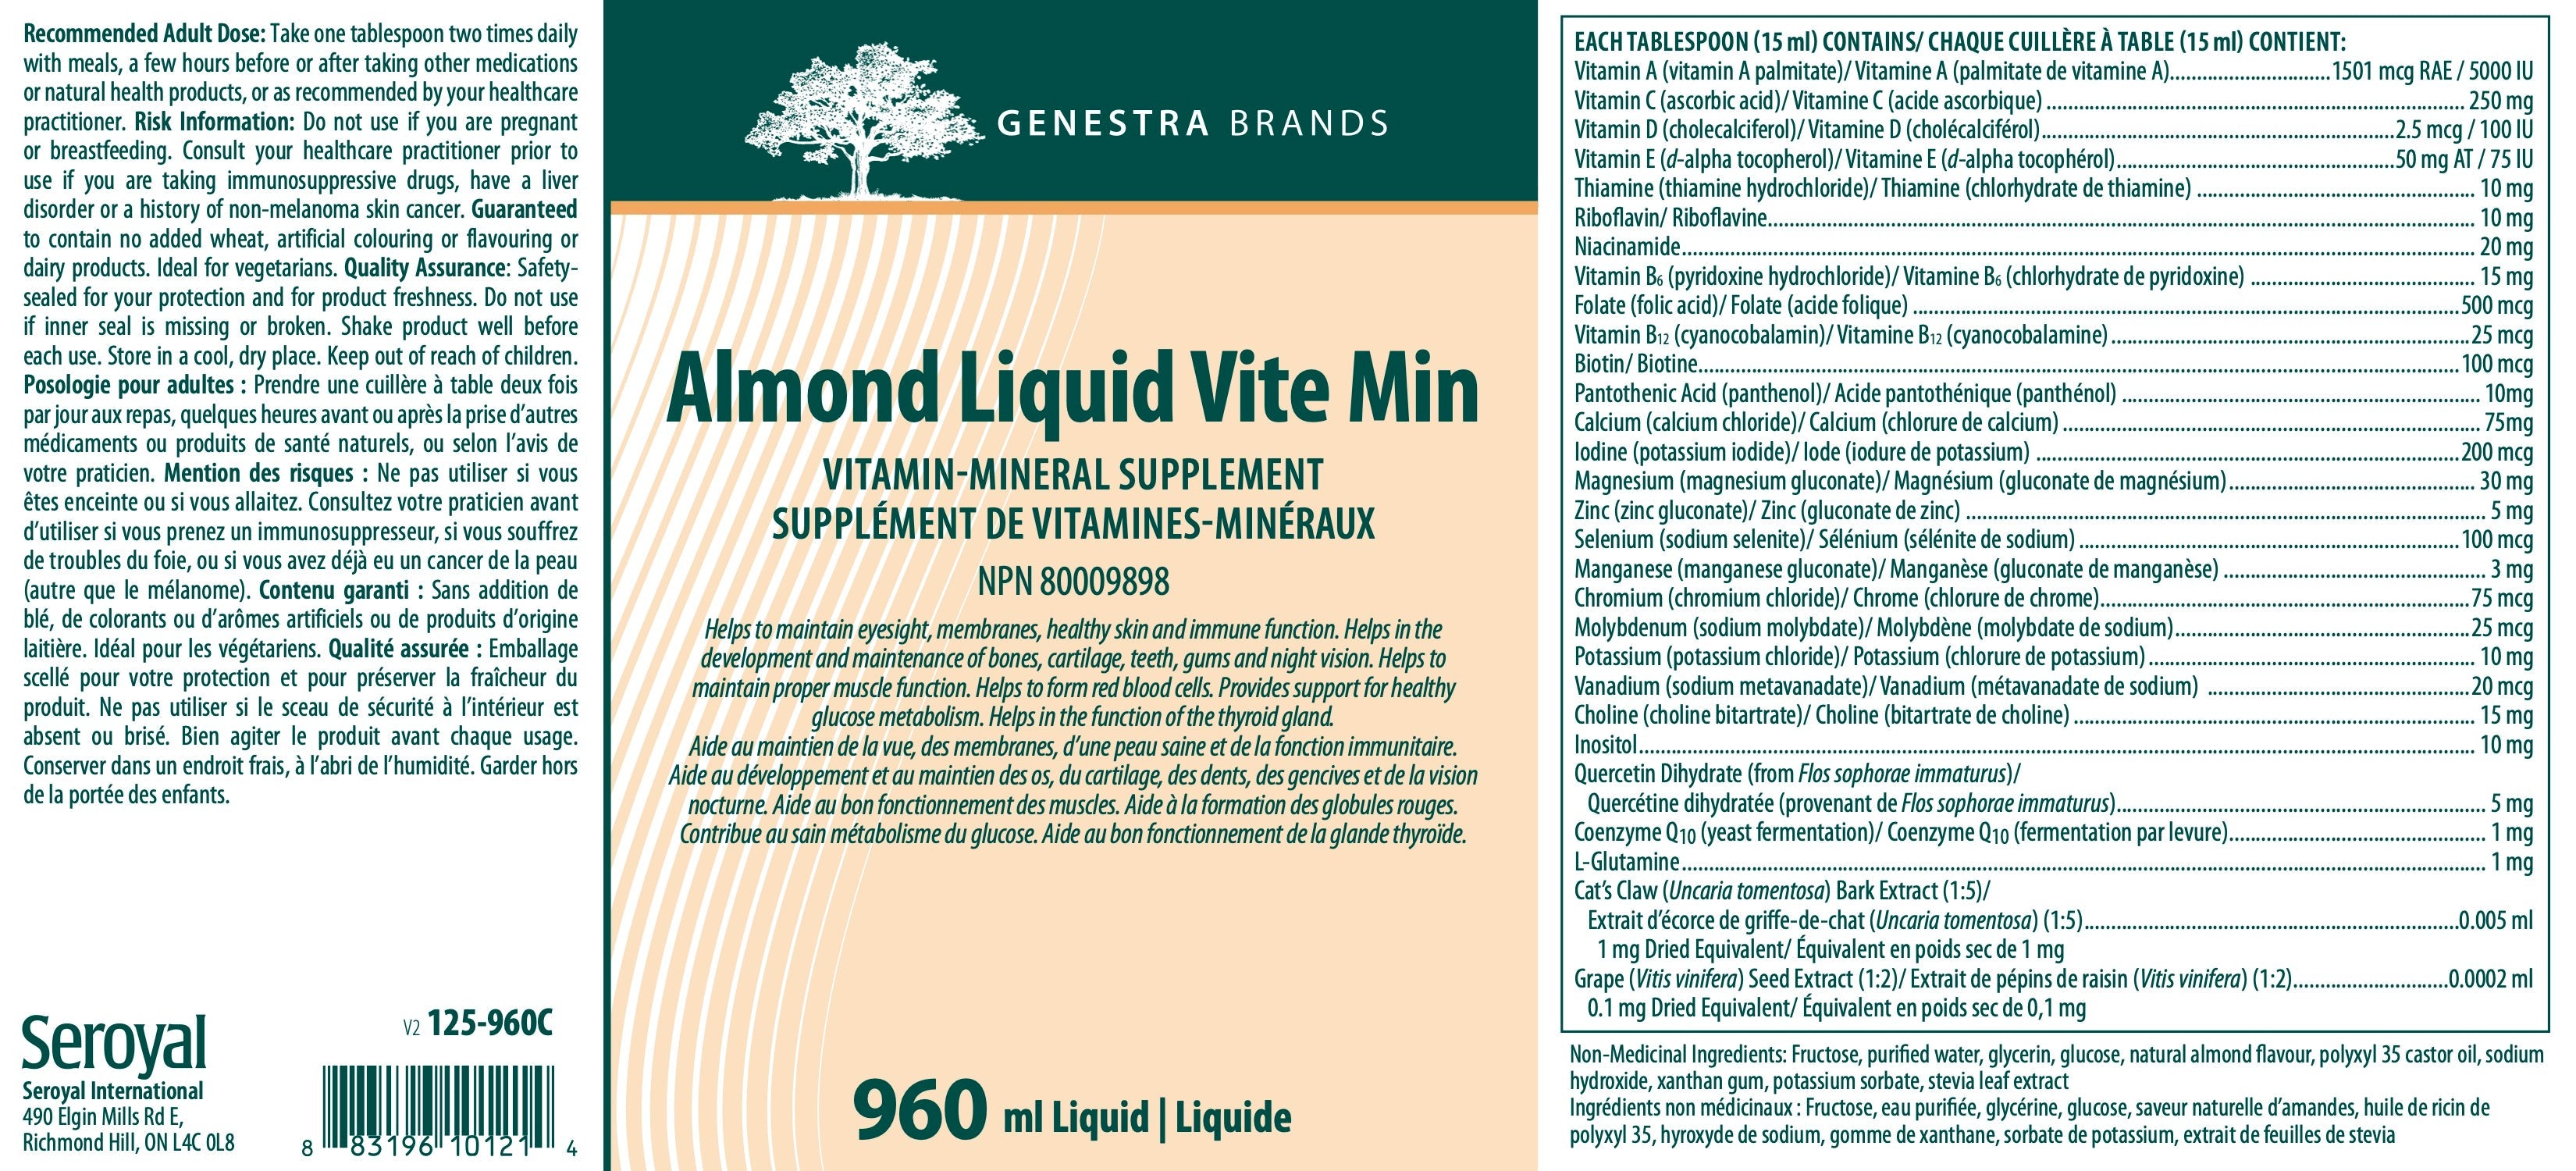 Almond Liquid Vite Min